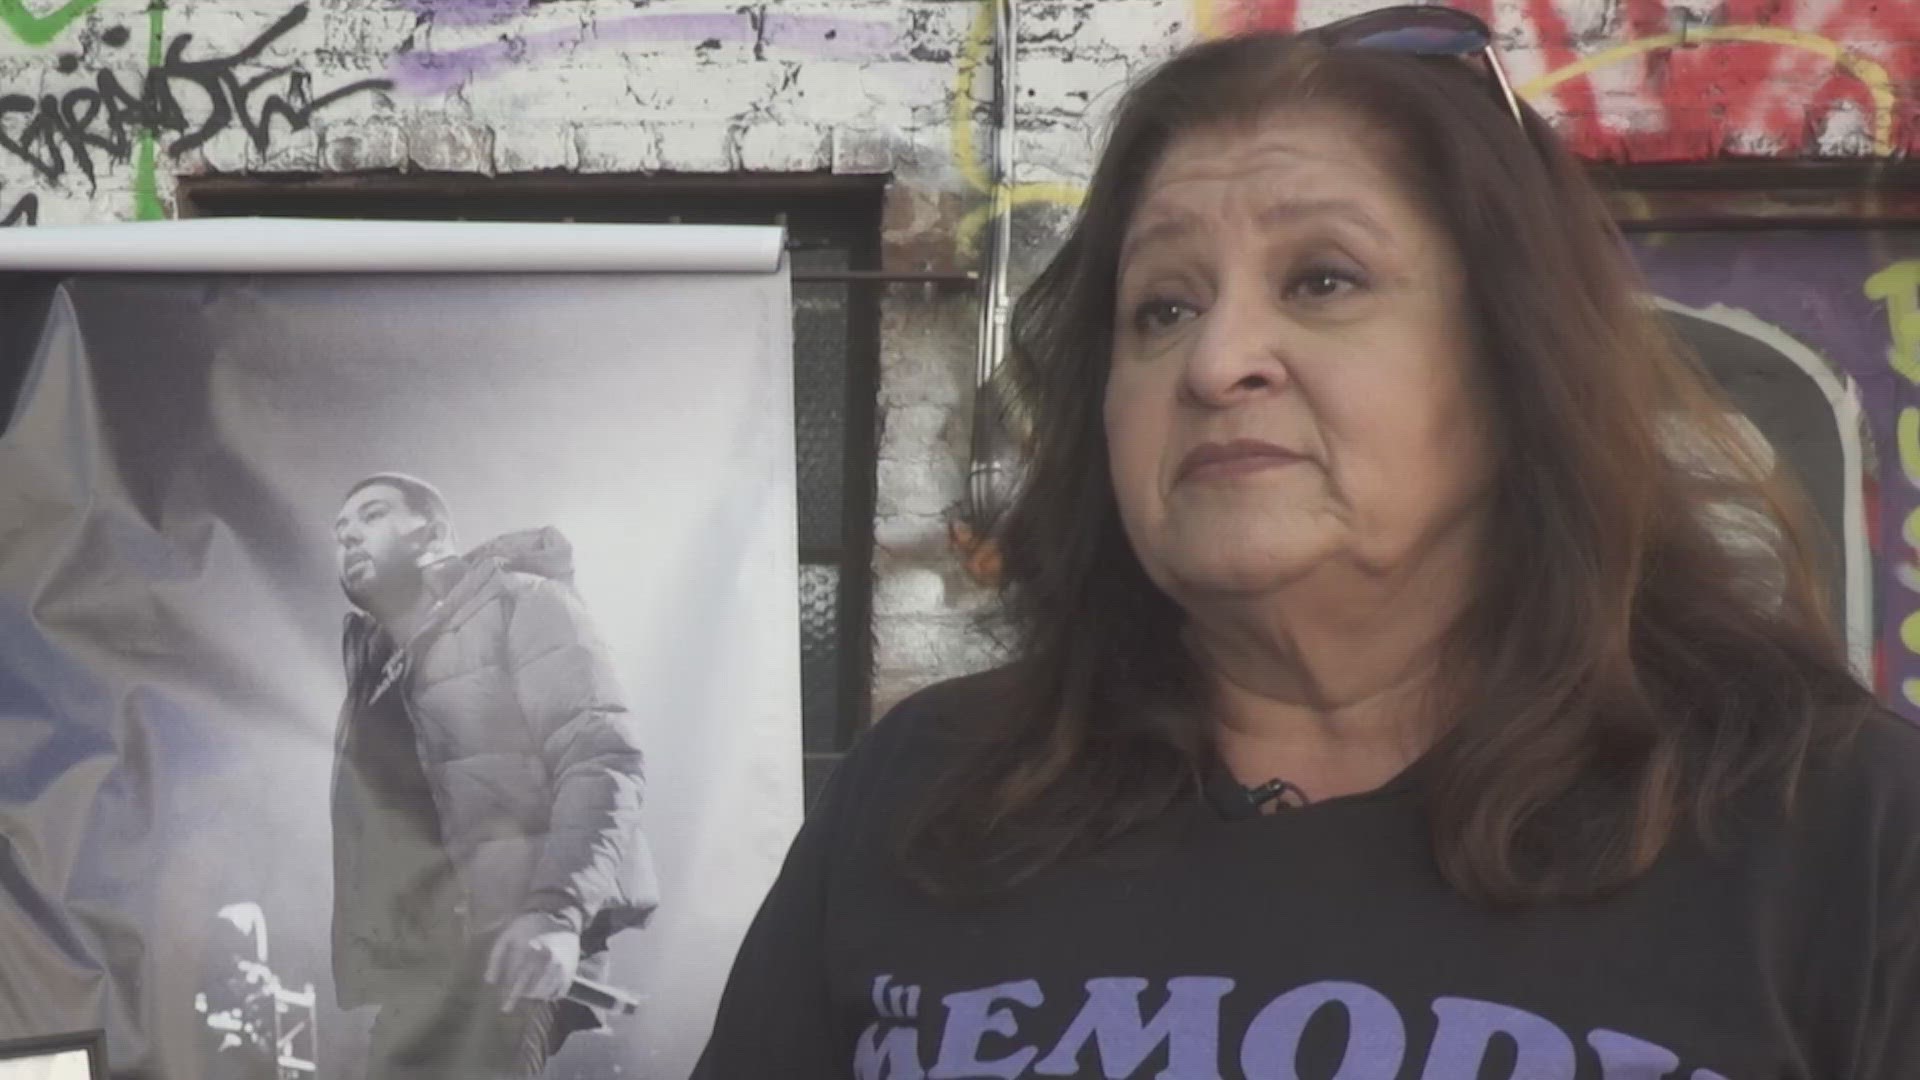 Sacramento mother expresses the importance of gun violence prevention